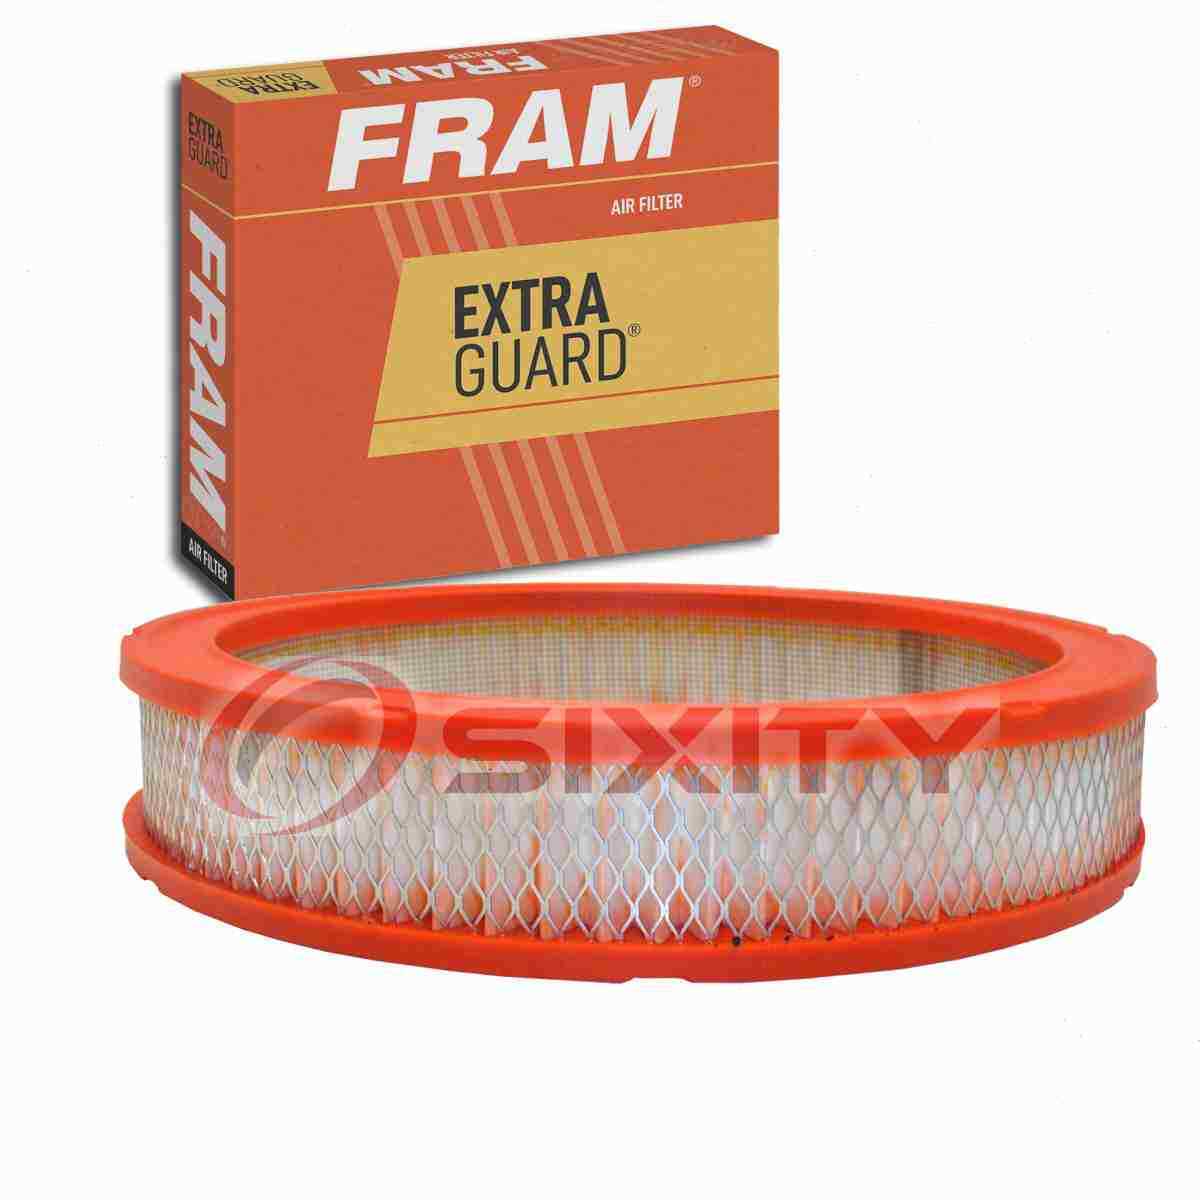 FRAM Extra Guard Air Filter for 1975-1980 Mercury Monarch Intake Inlet sj